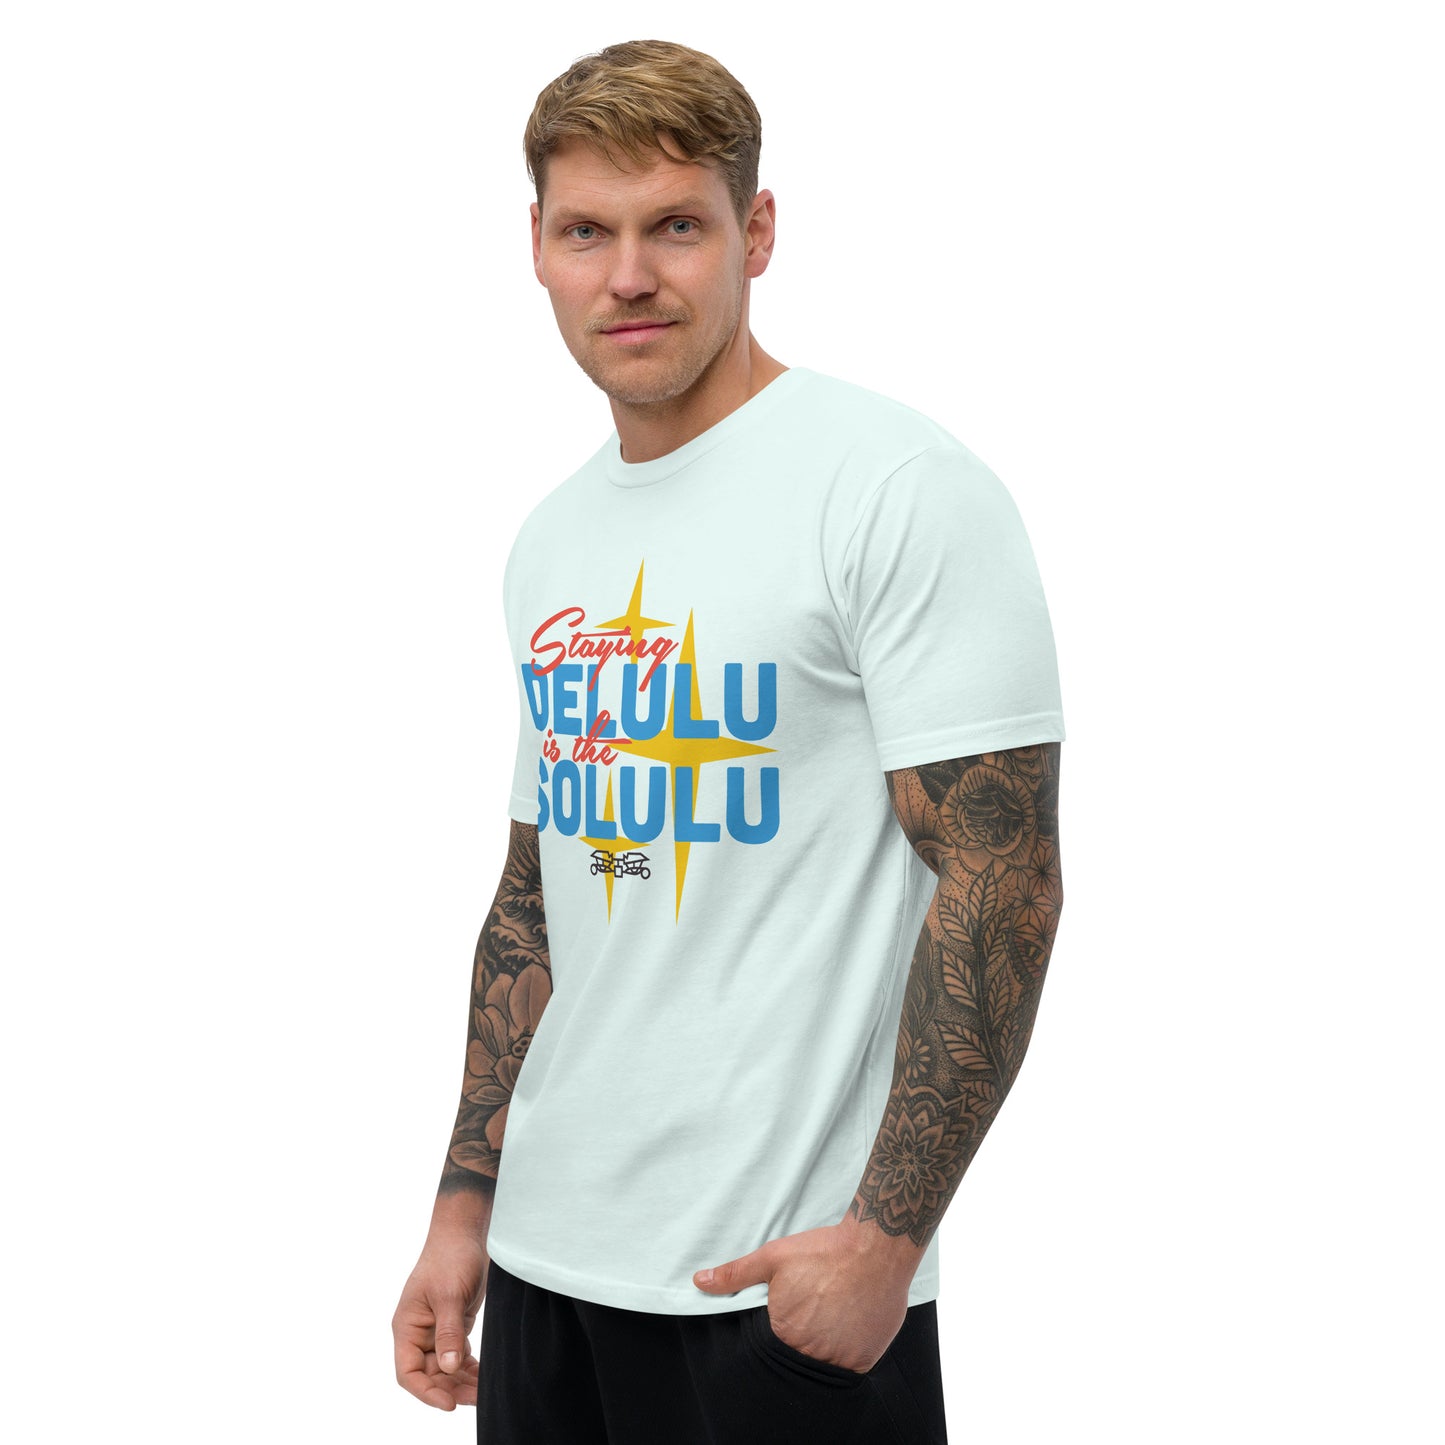 Delulu Shirt